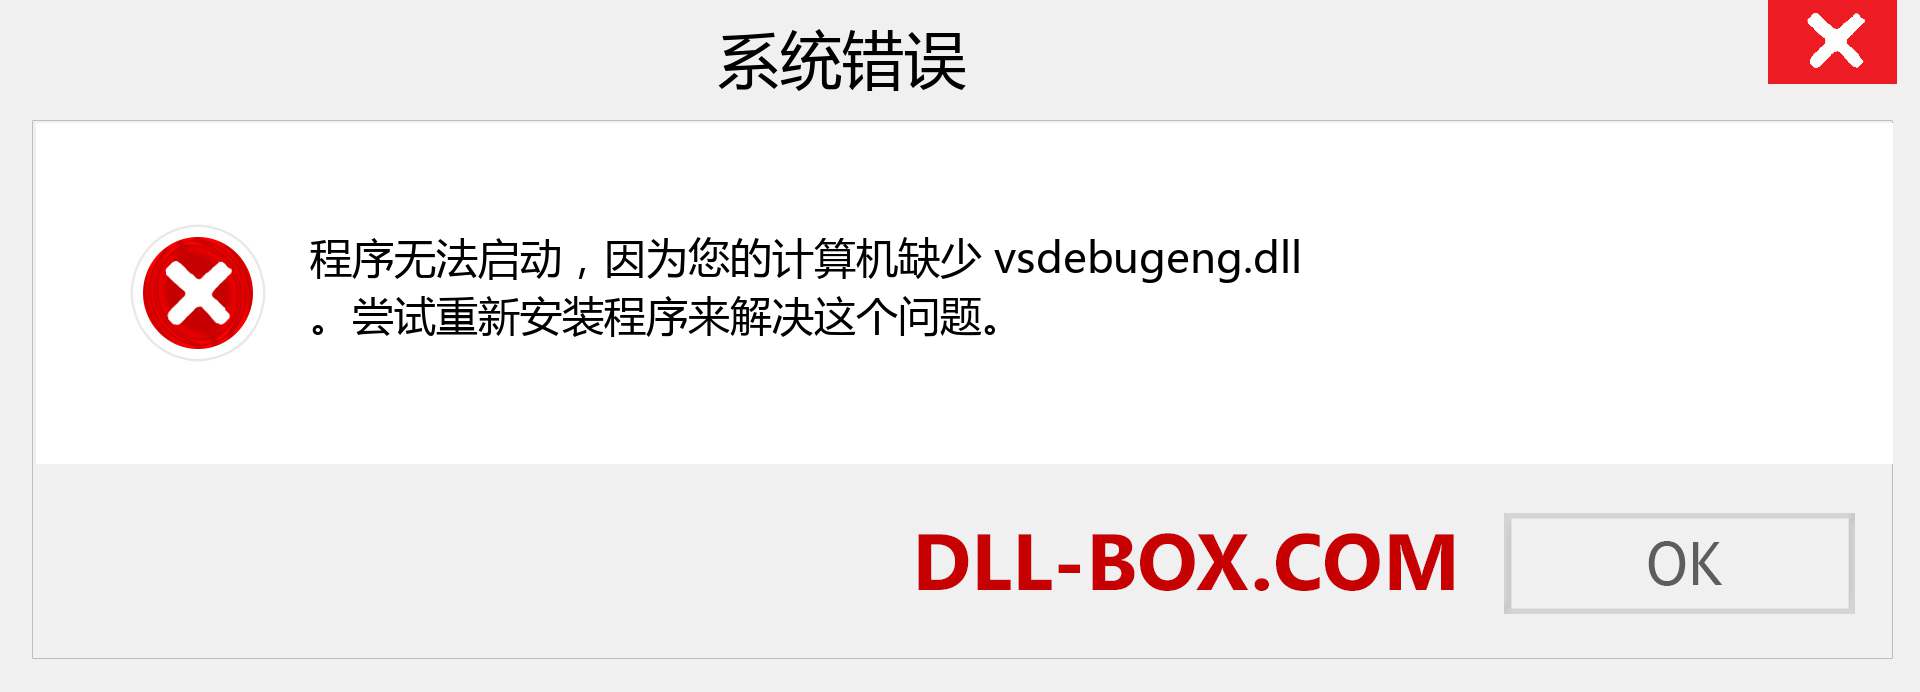 vsdebugeng.dll 文件丢失？。 适用于 Windows 7、8、10 的下载 - 修复 Windows、照片、图像上的 vsdebugeng dll 丢失错误